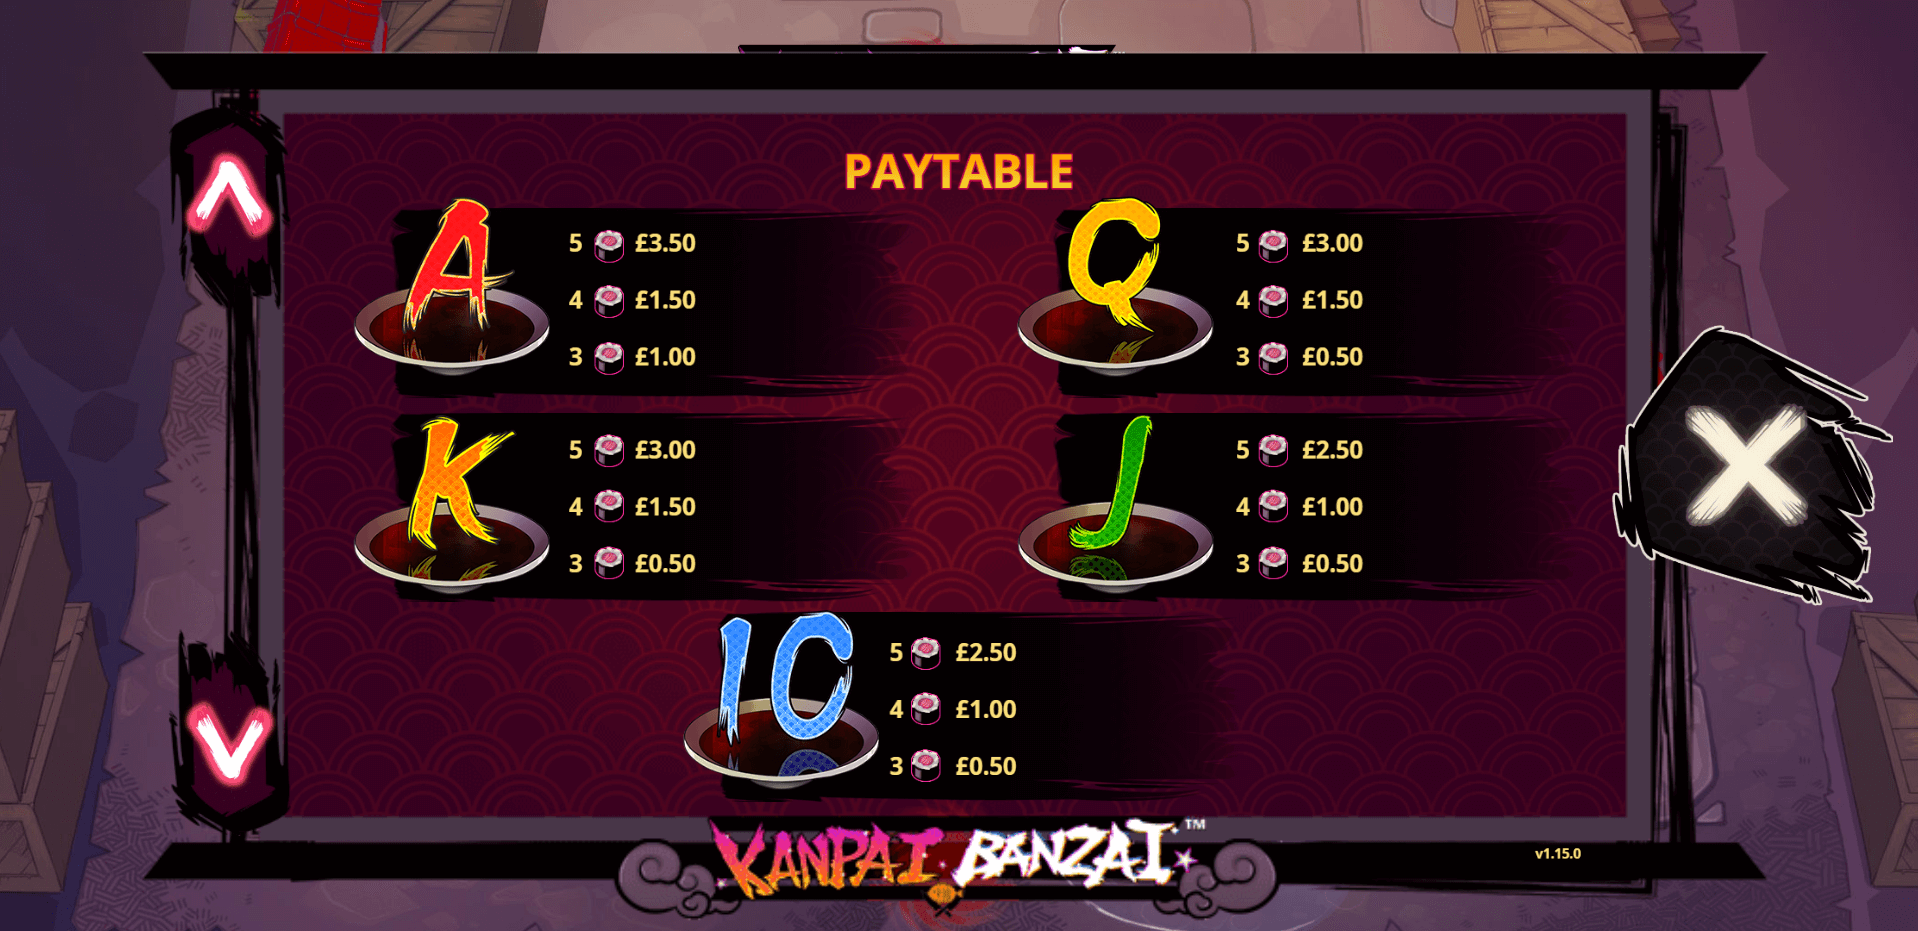 kanpai banzai slot machine detail image 6